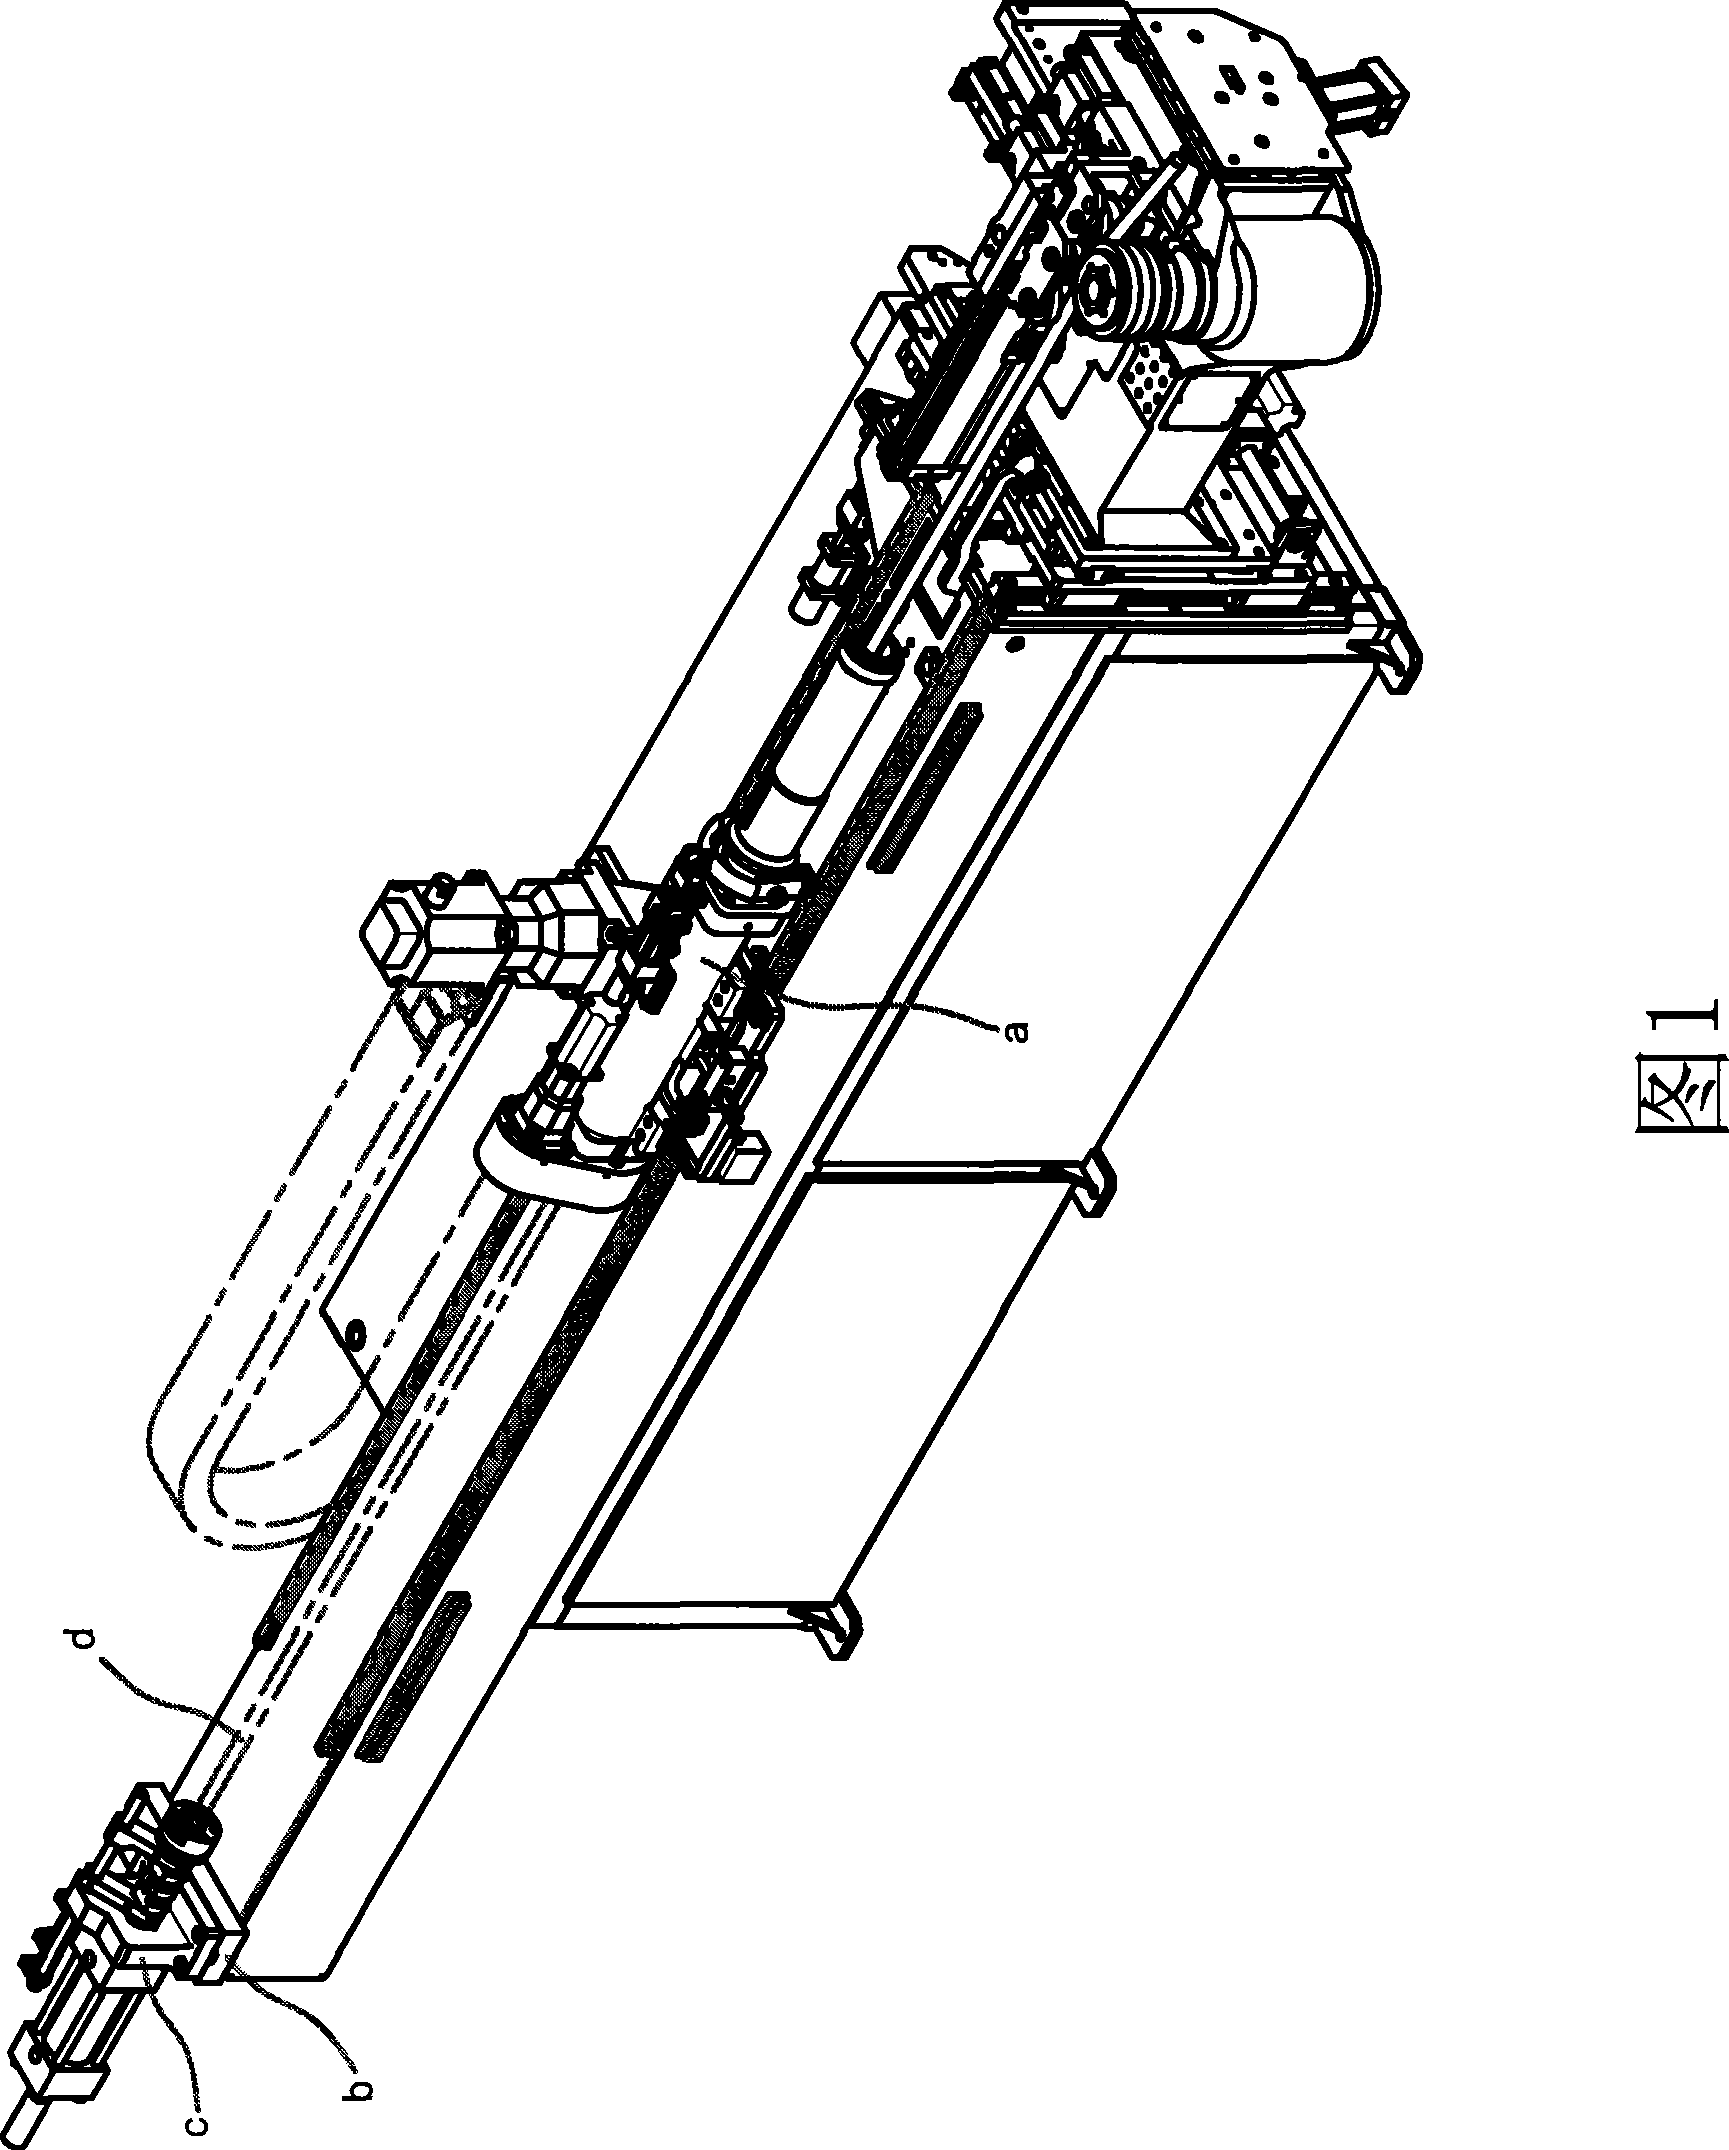 Pipe bender with mandrel driving mechanism